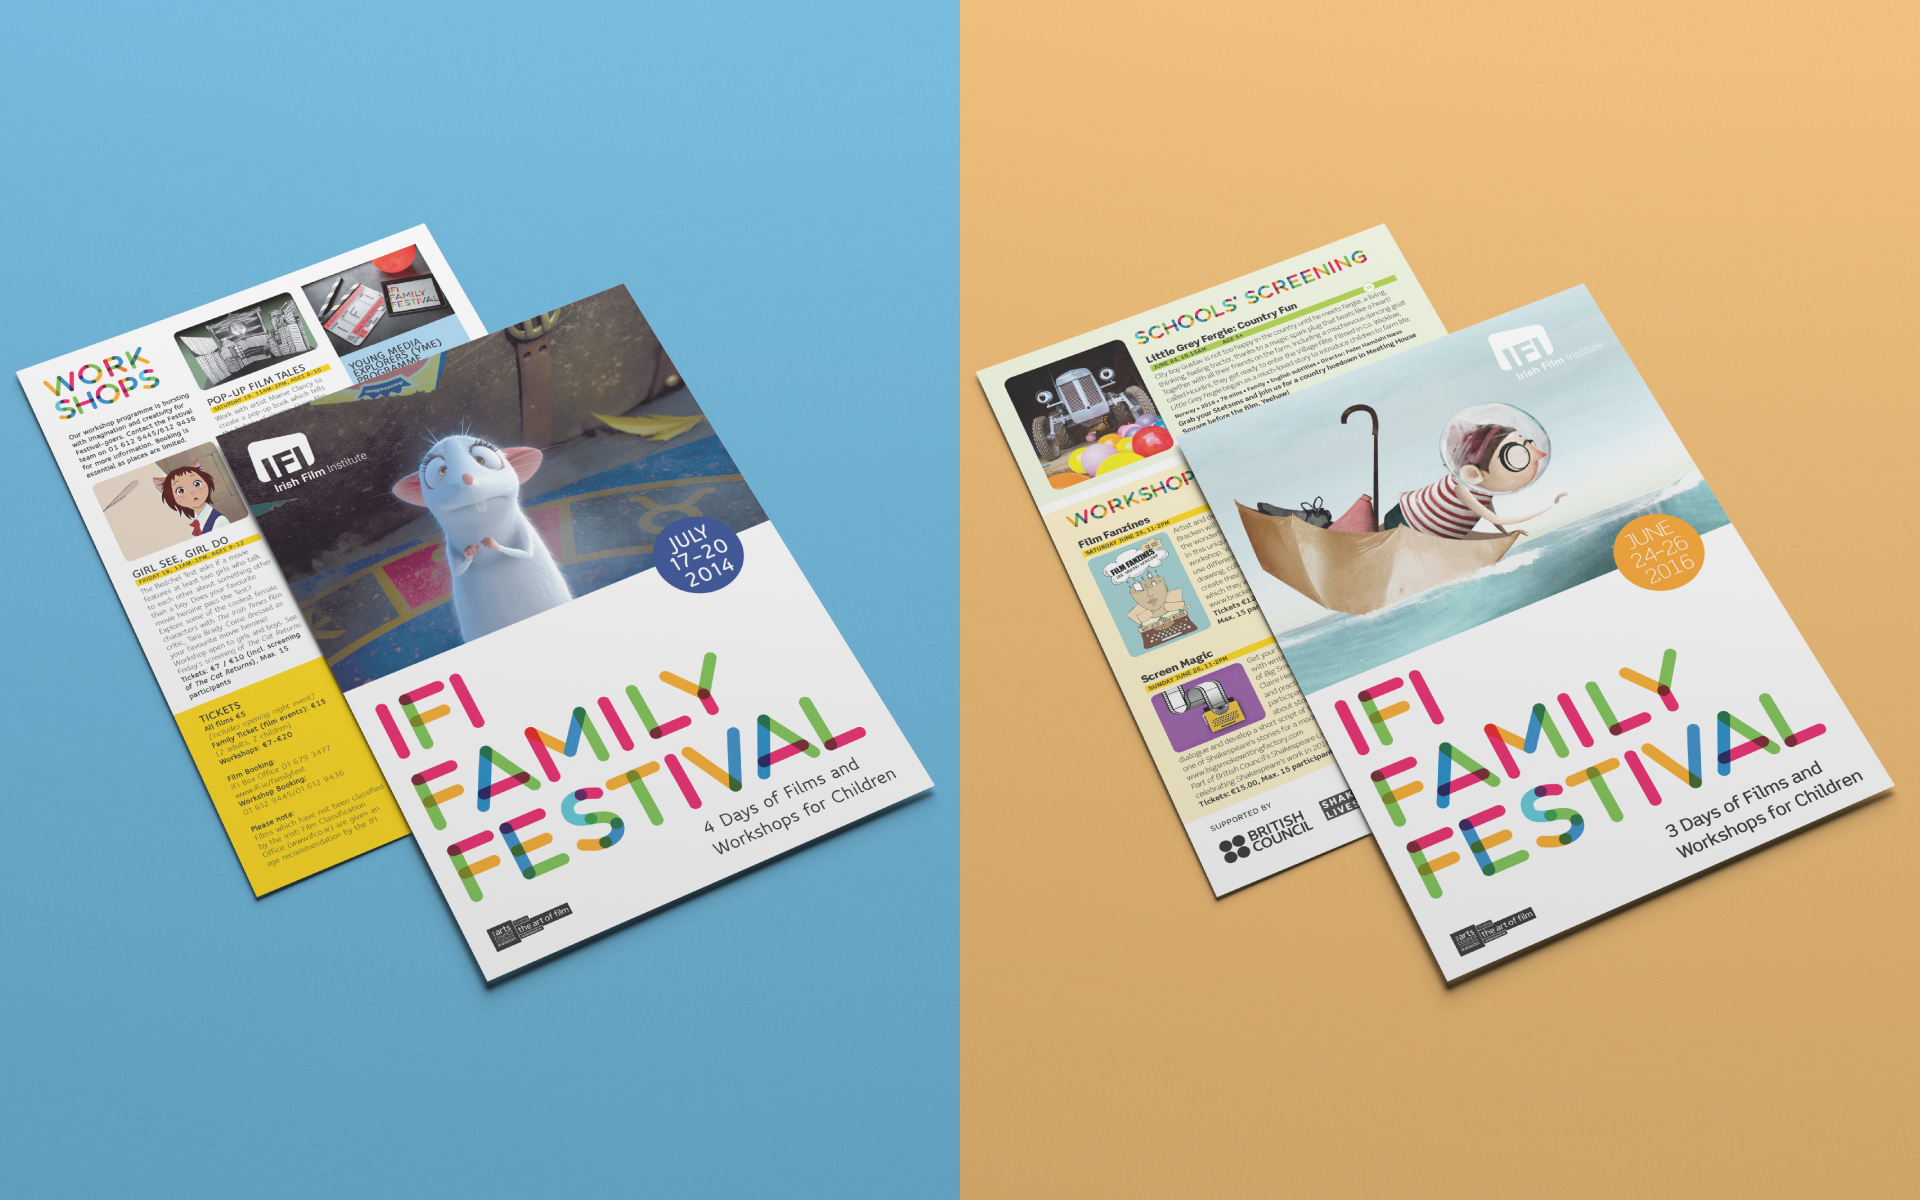 Irish Film Institute Family Festival programme